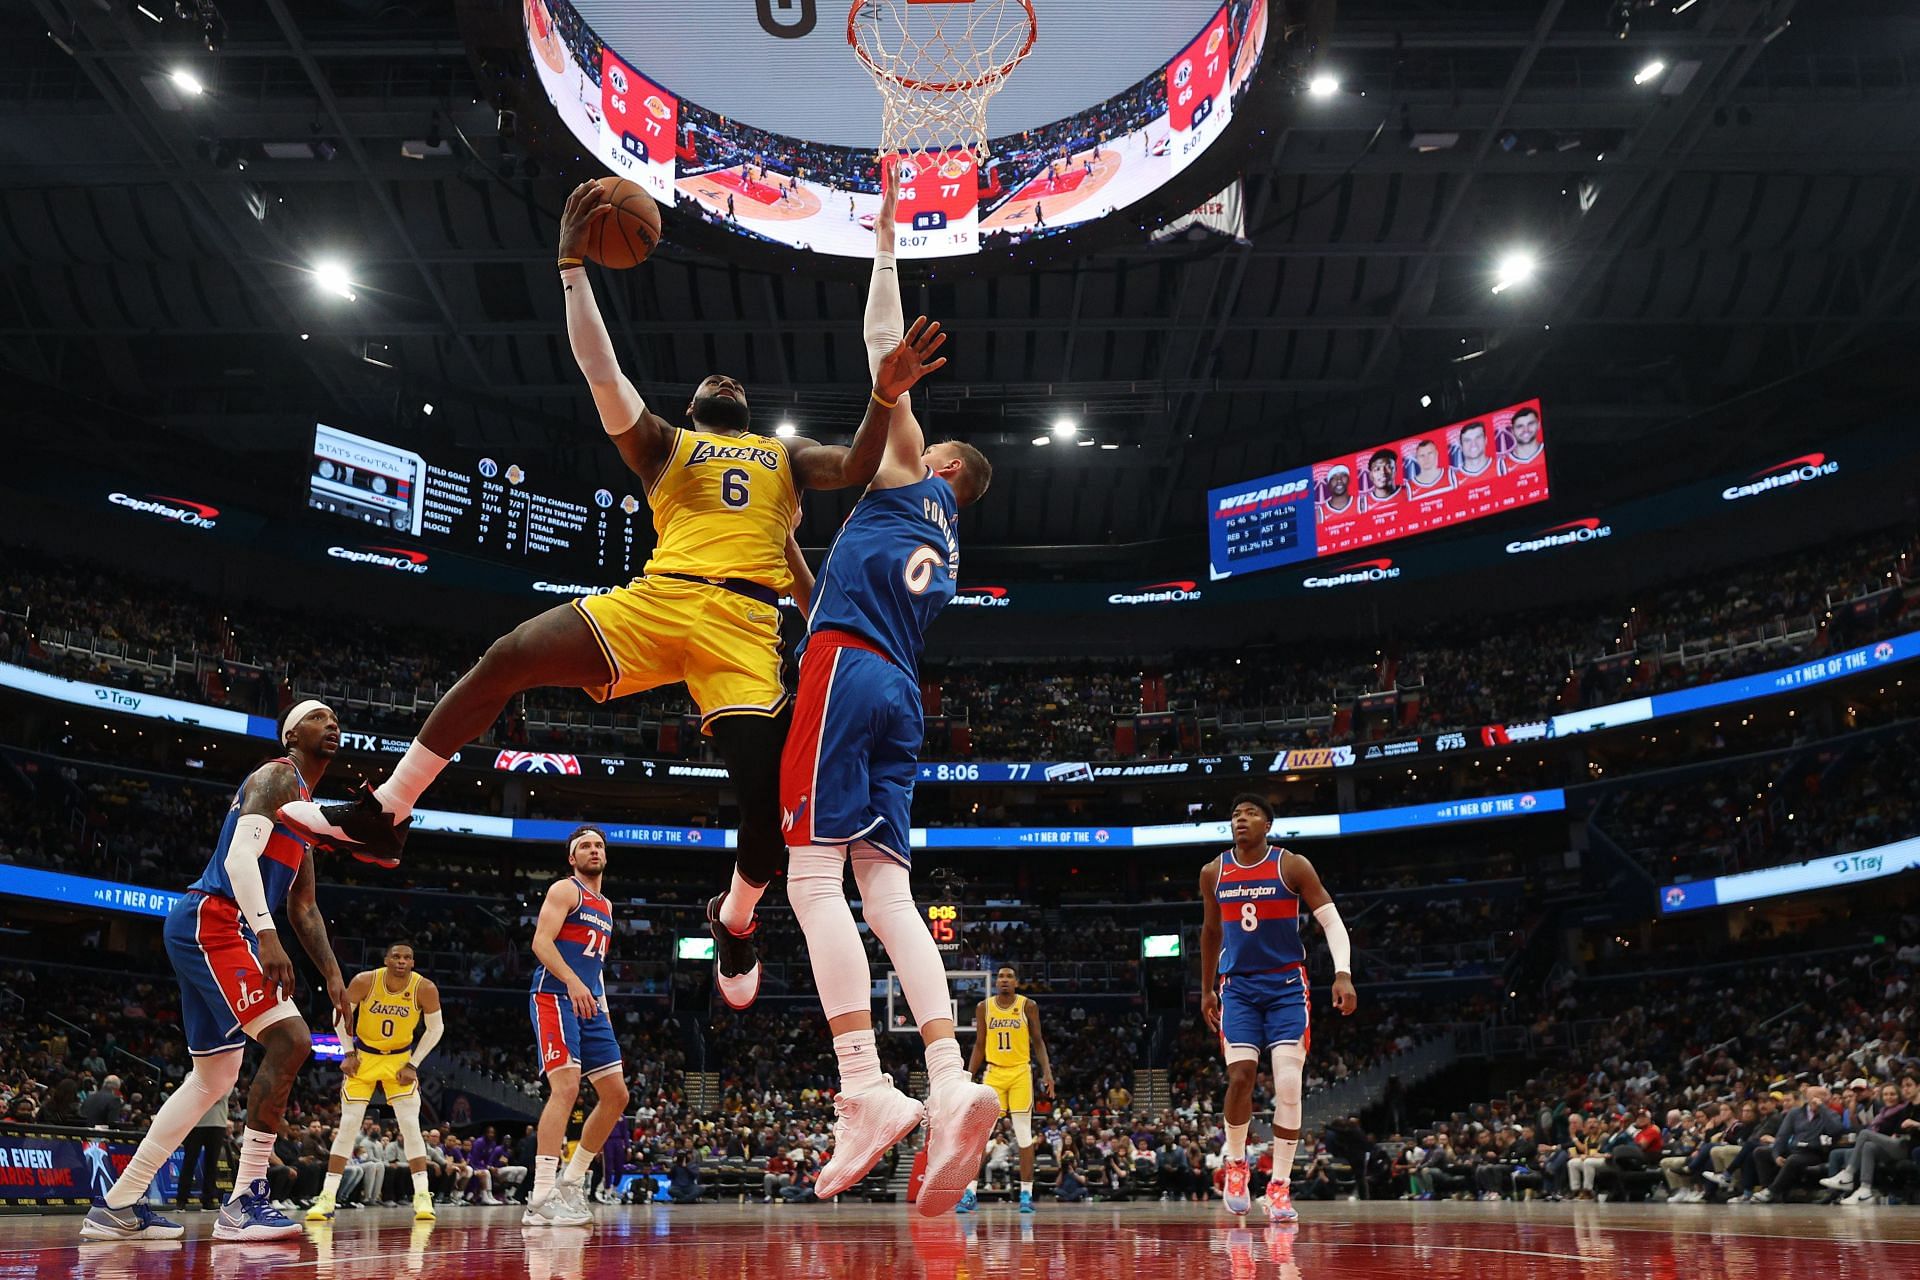 Los Angeles Lakers v Washington Wizards; LeBron James shootings the ball